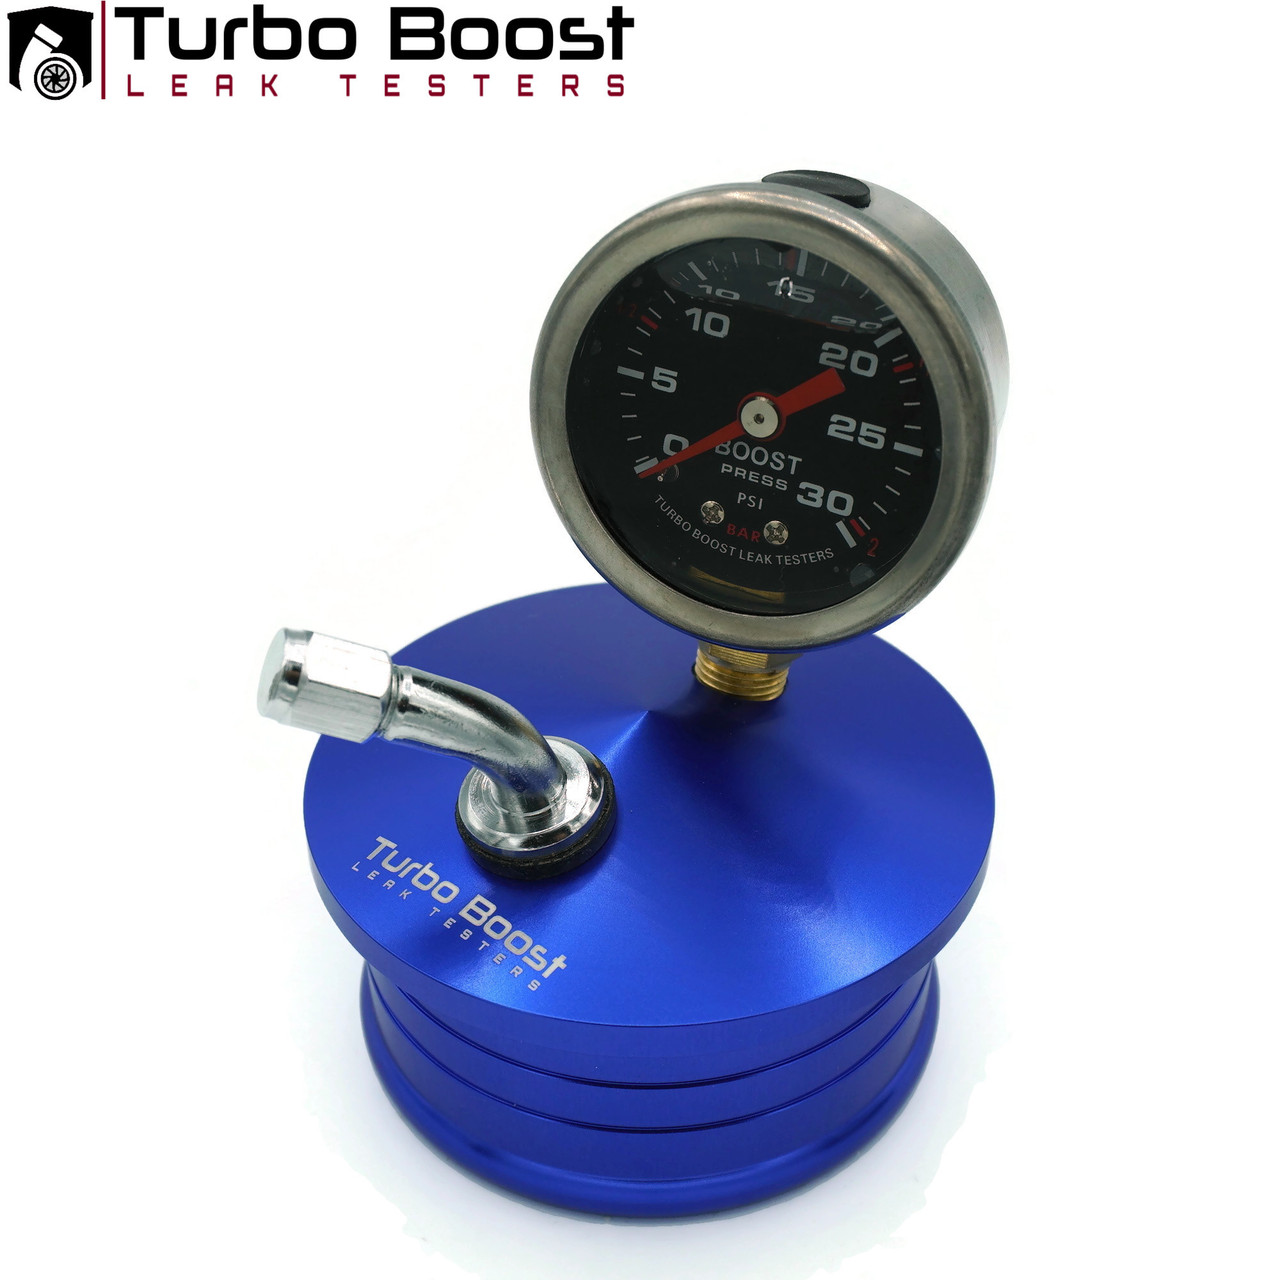 Turbo Boost Leak Testers 2 for 2 Turbo or Intake Pipe - Universal Tester  Test Kit - Test Upto 30 PSI - Premium - 6061 Aluminum - Restore Power!